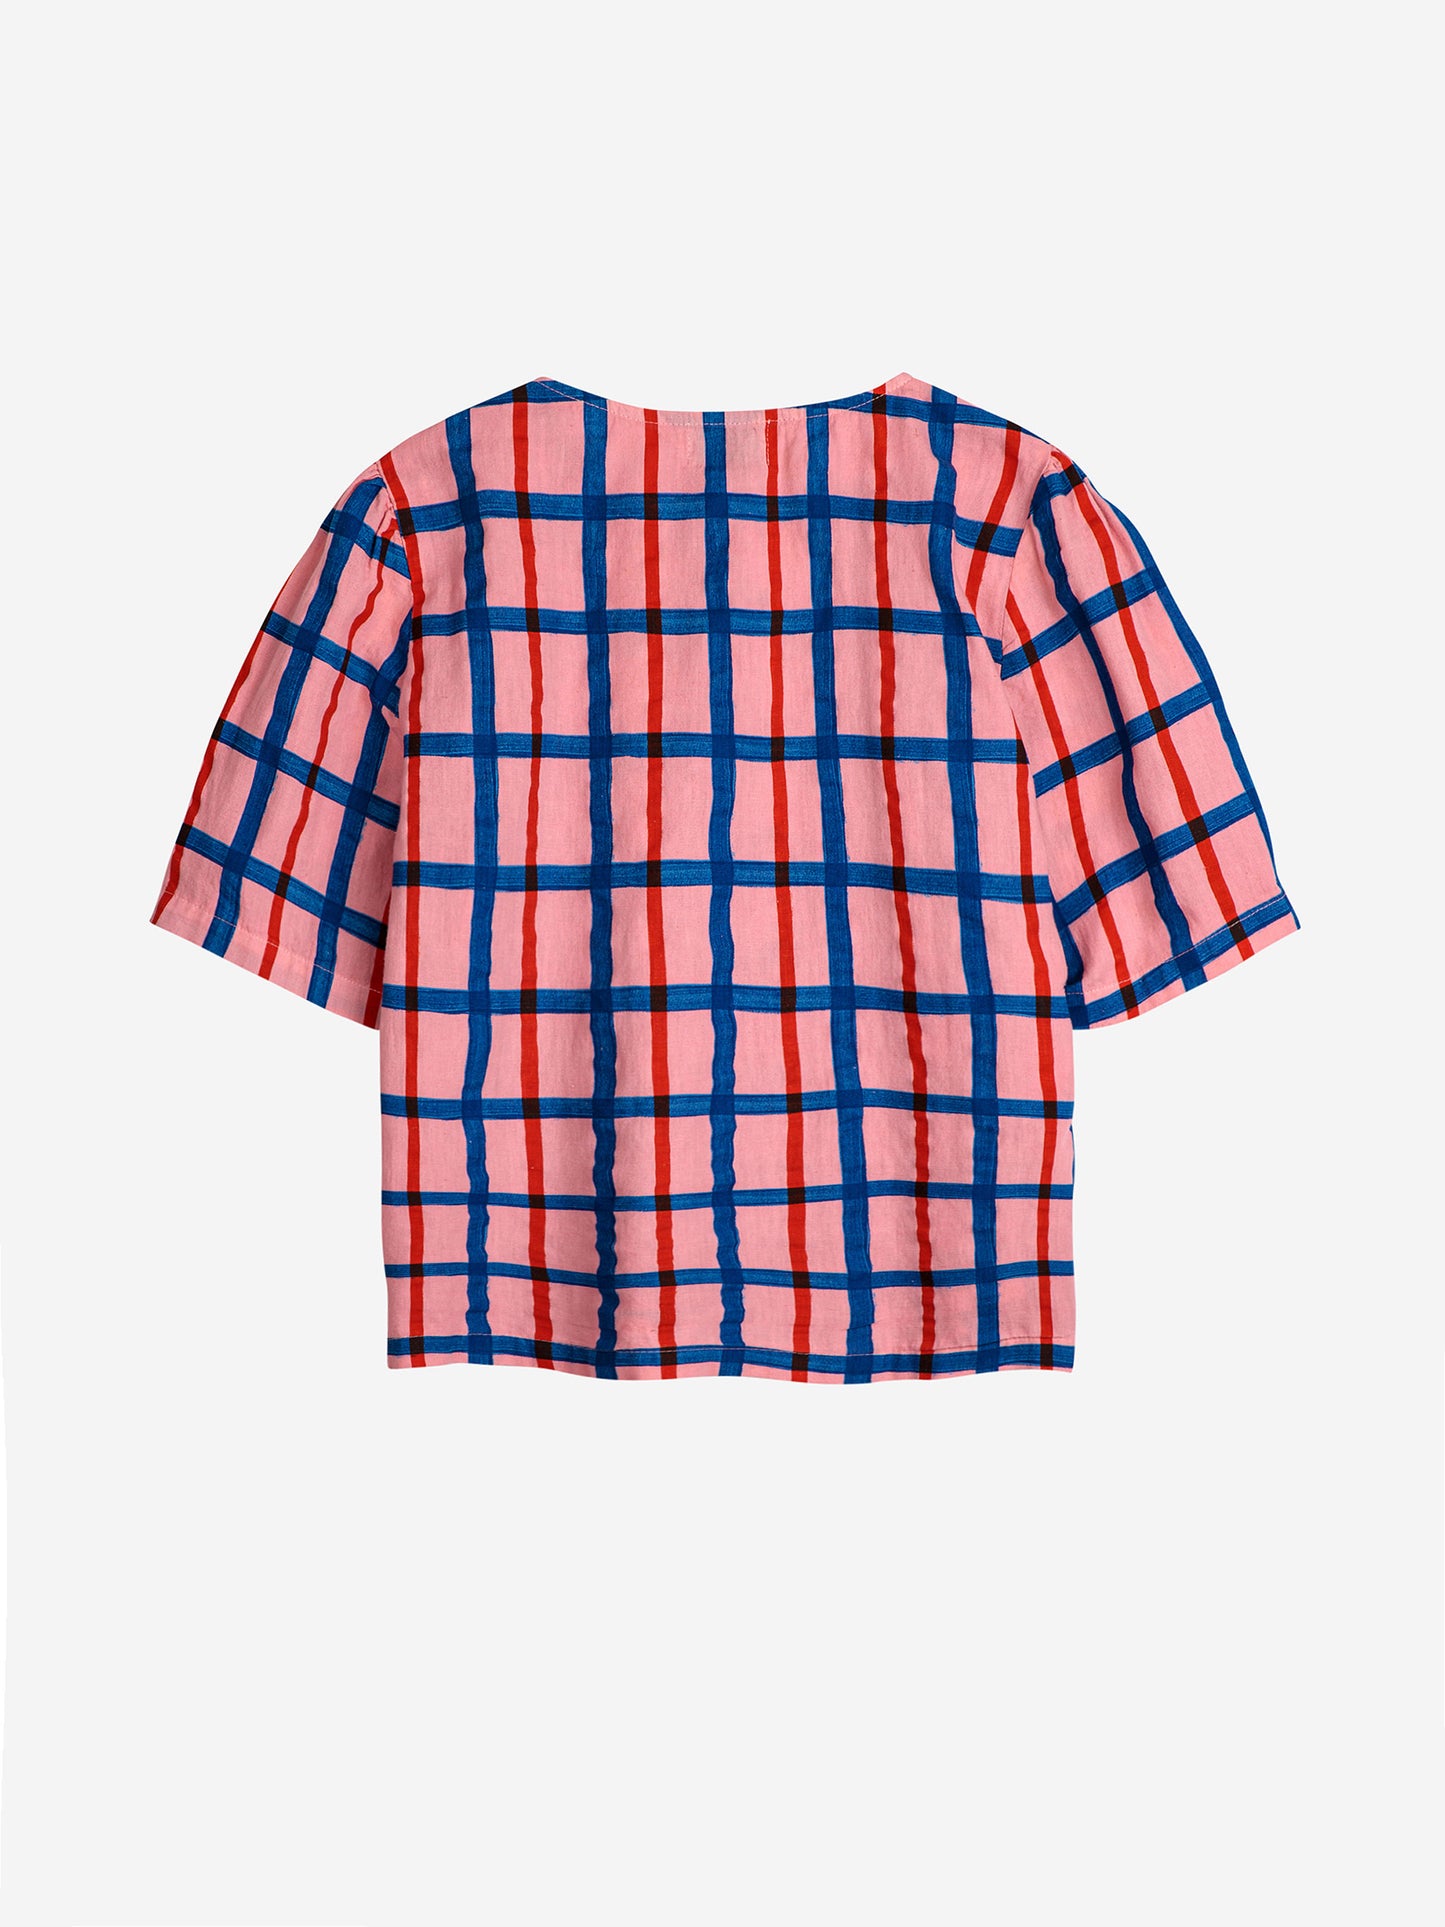 Multicolored check print shirt